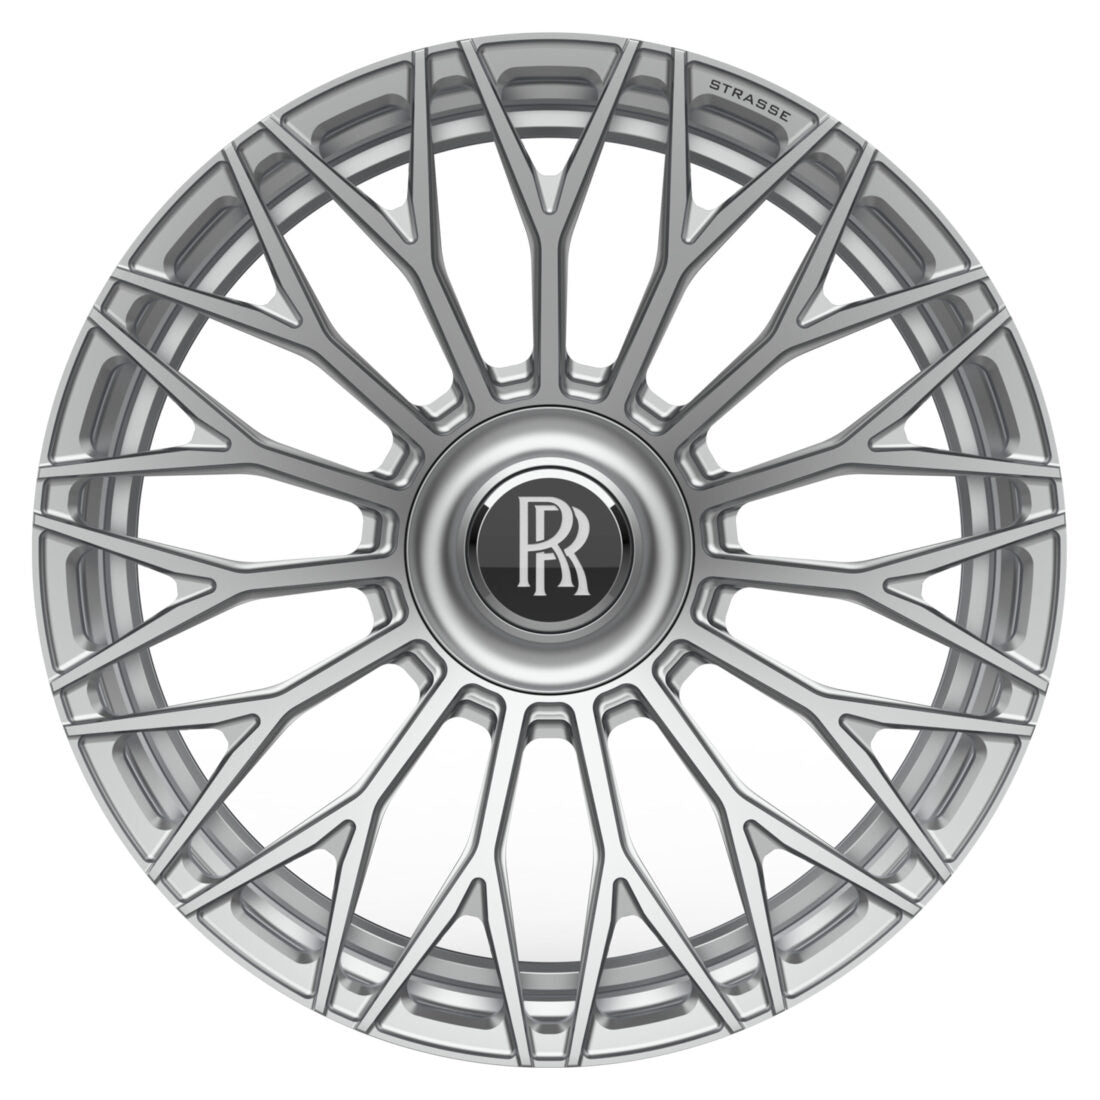 STRASSE SV15M DEEP CONCAVE DUOBLOCK RR - Wheel Designers